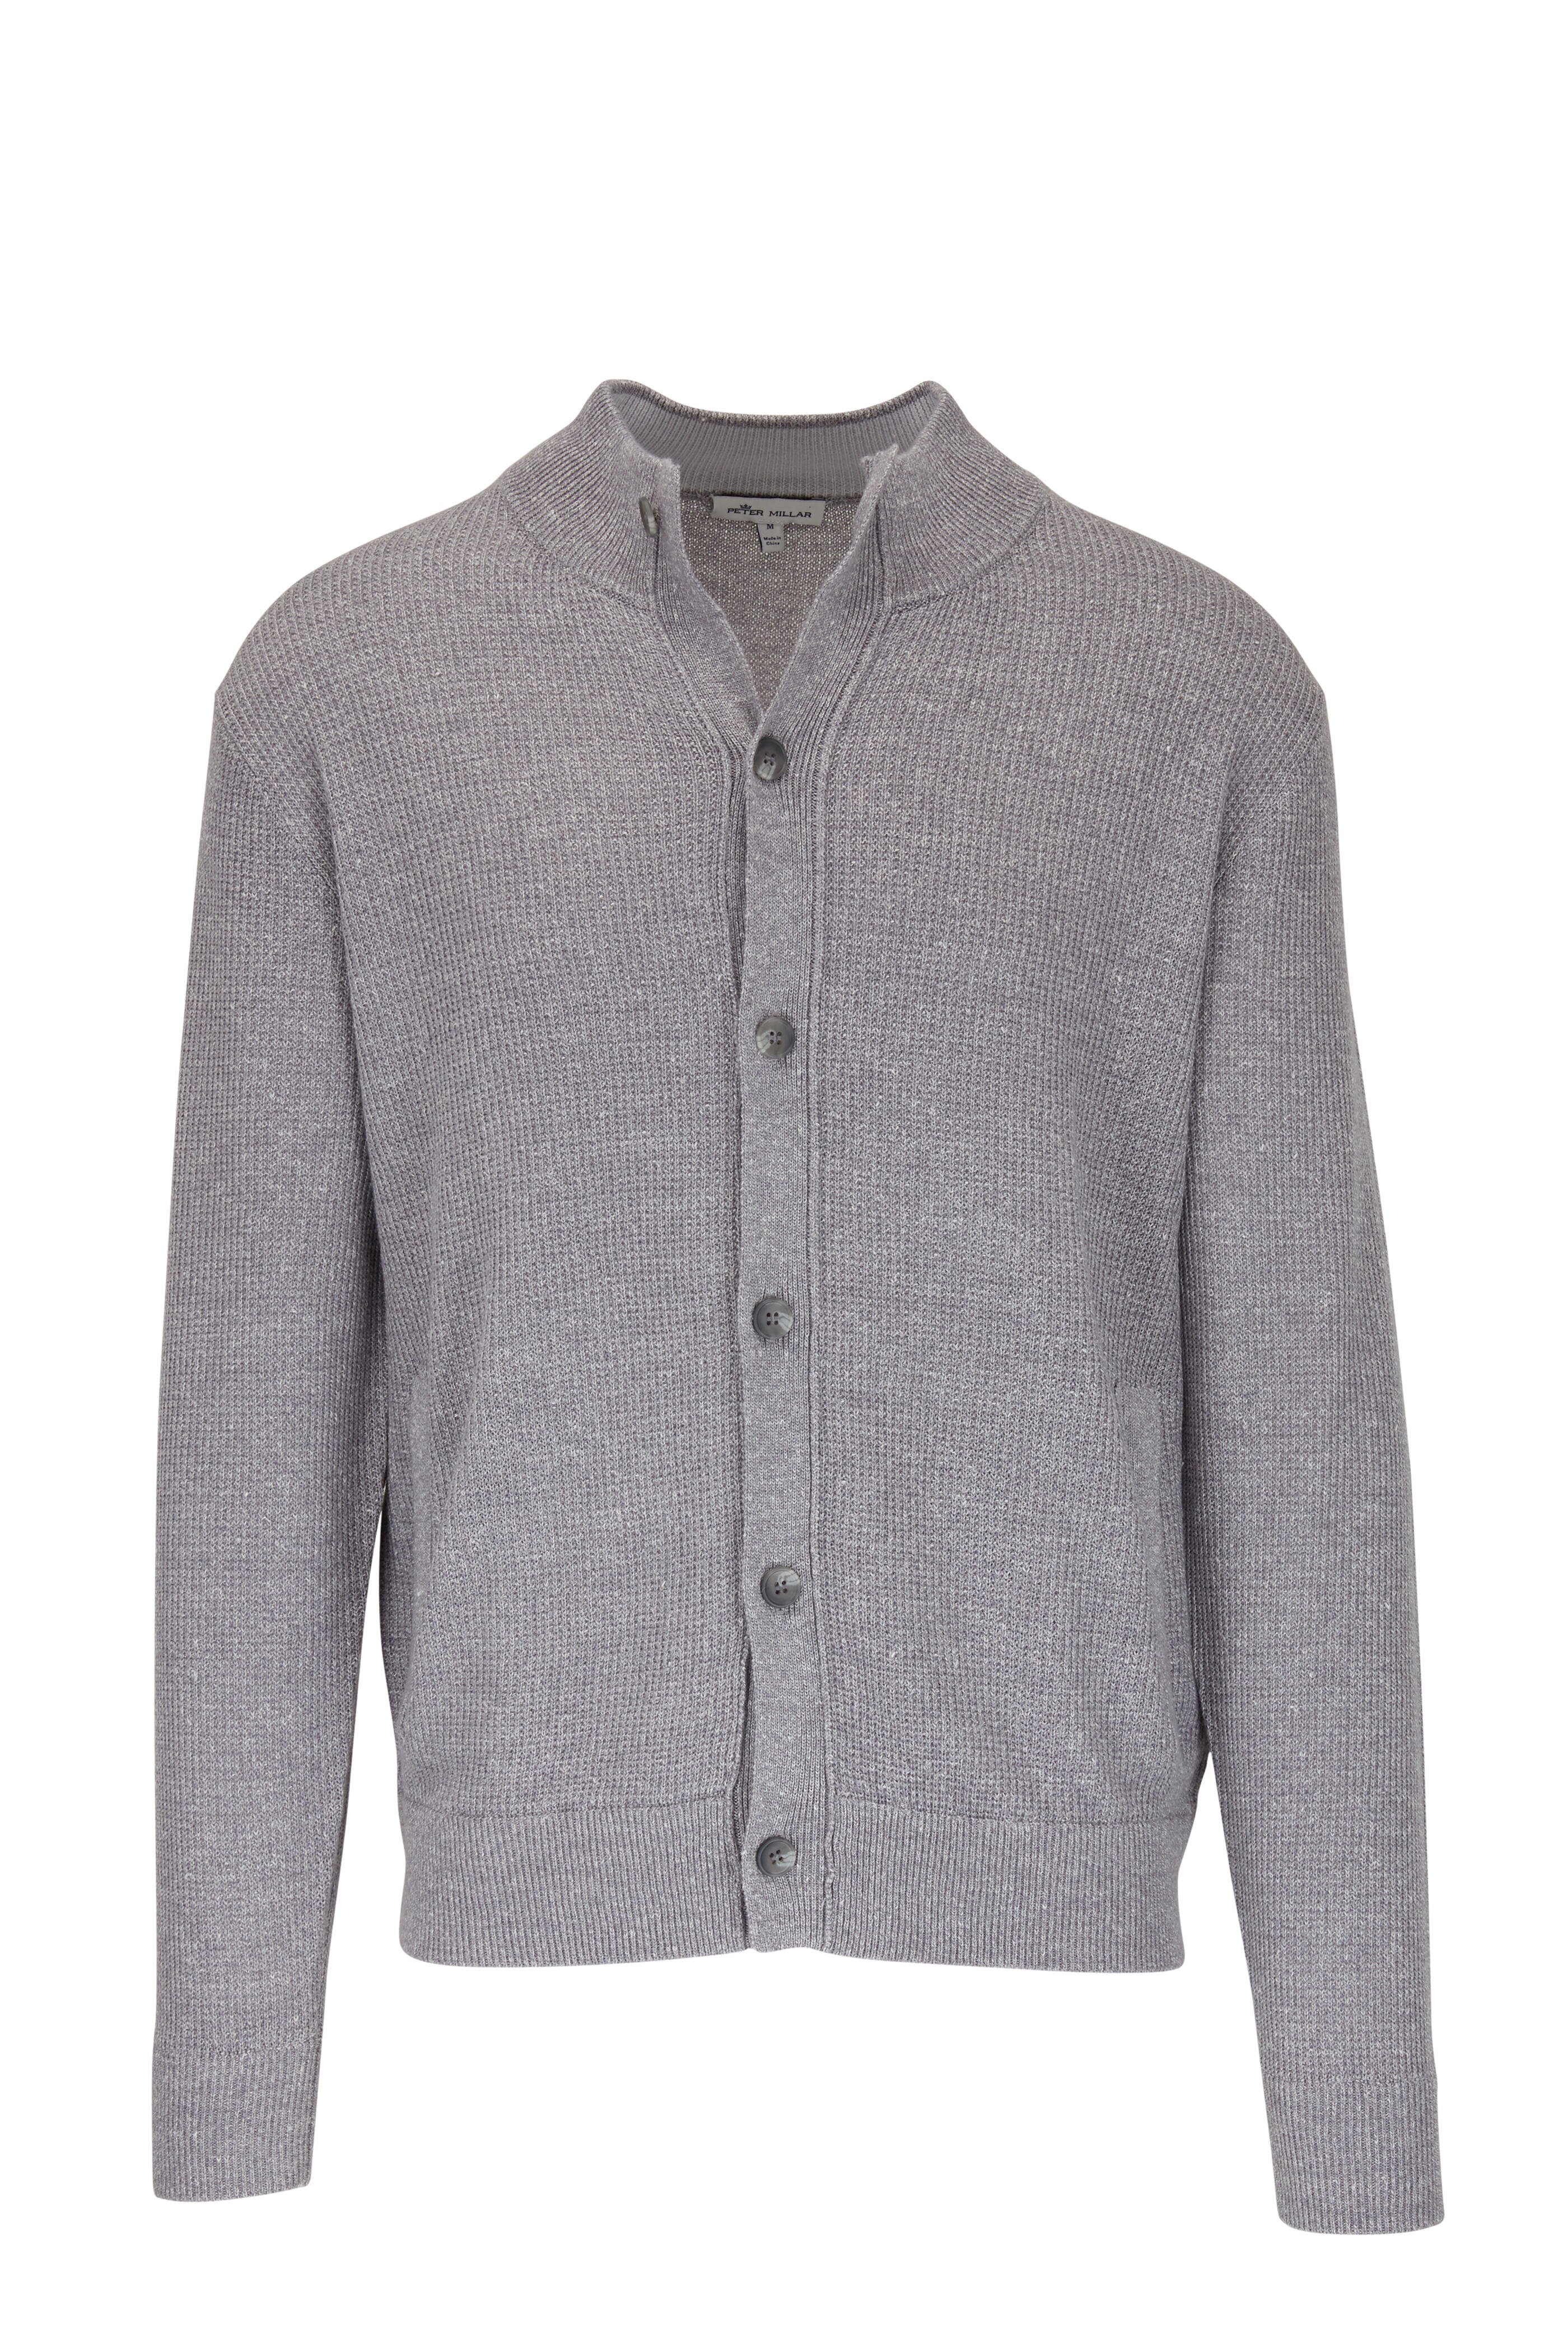 Peter Millar - Coastal Gray Wool & Linen Front Button Cardigan